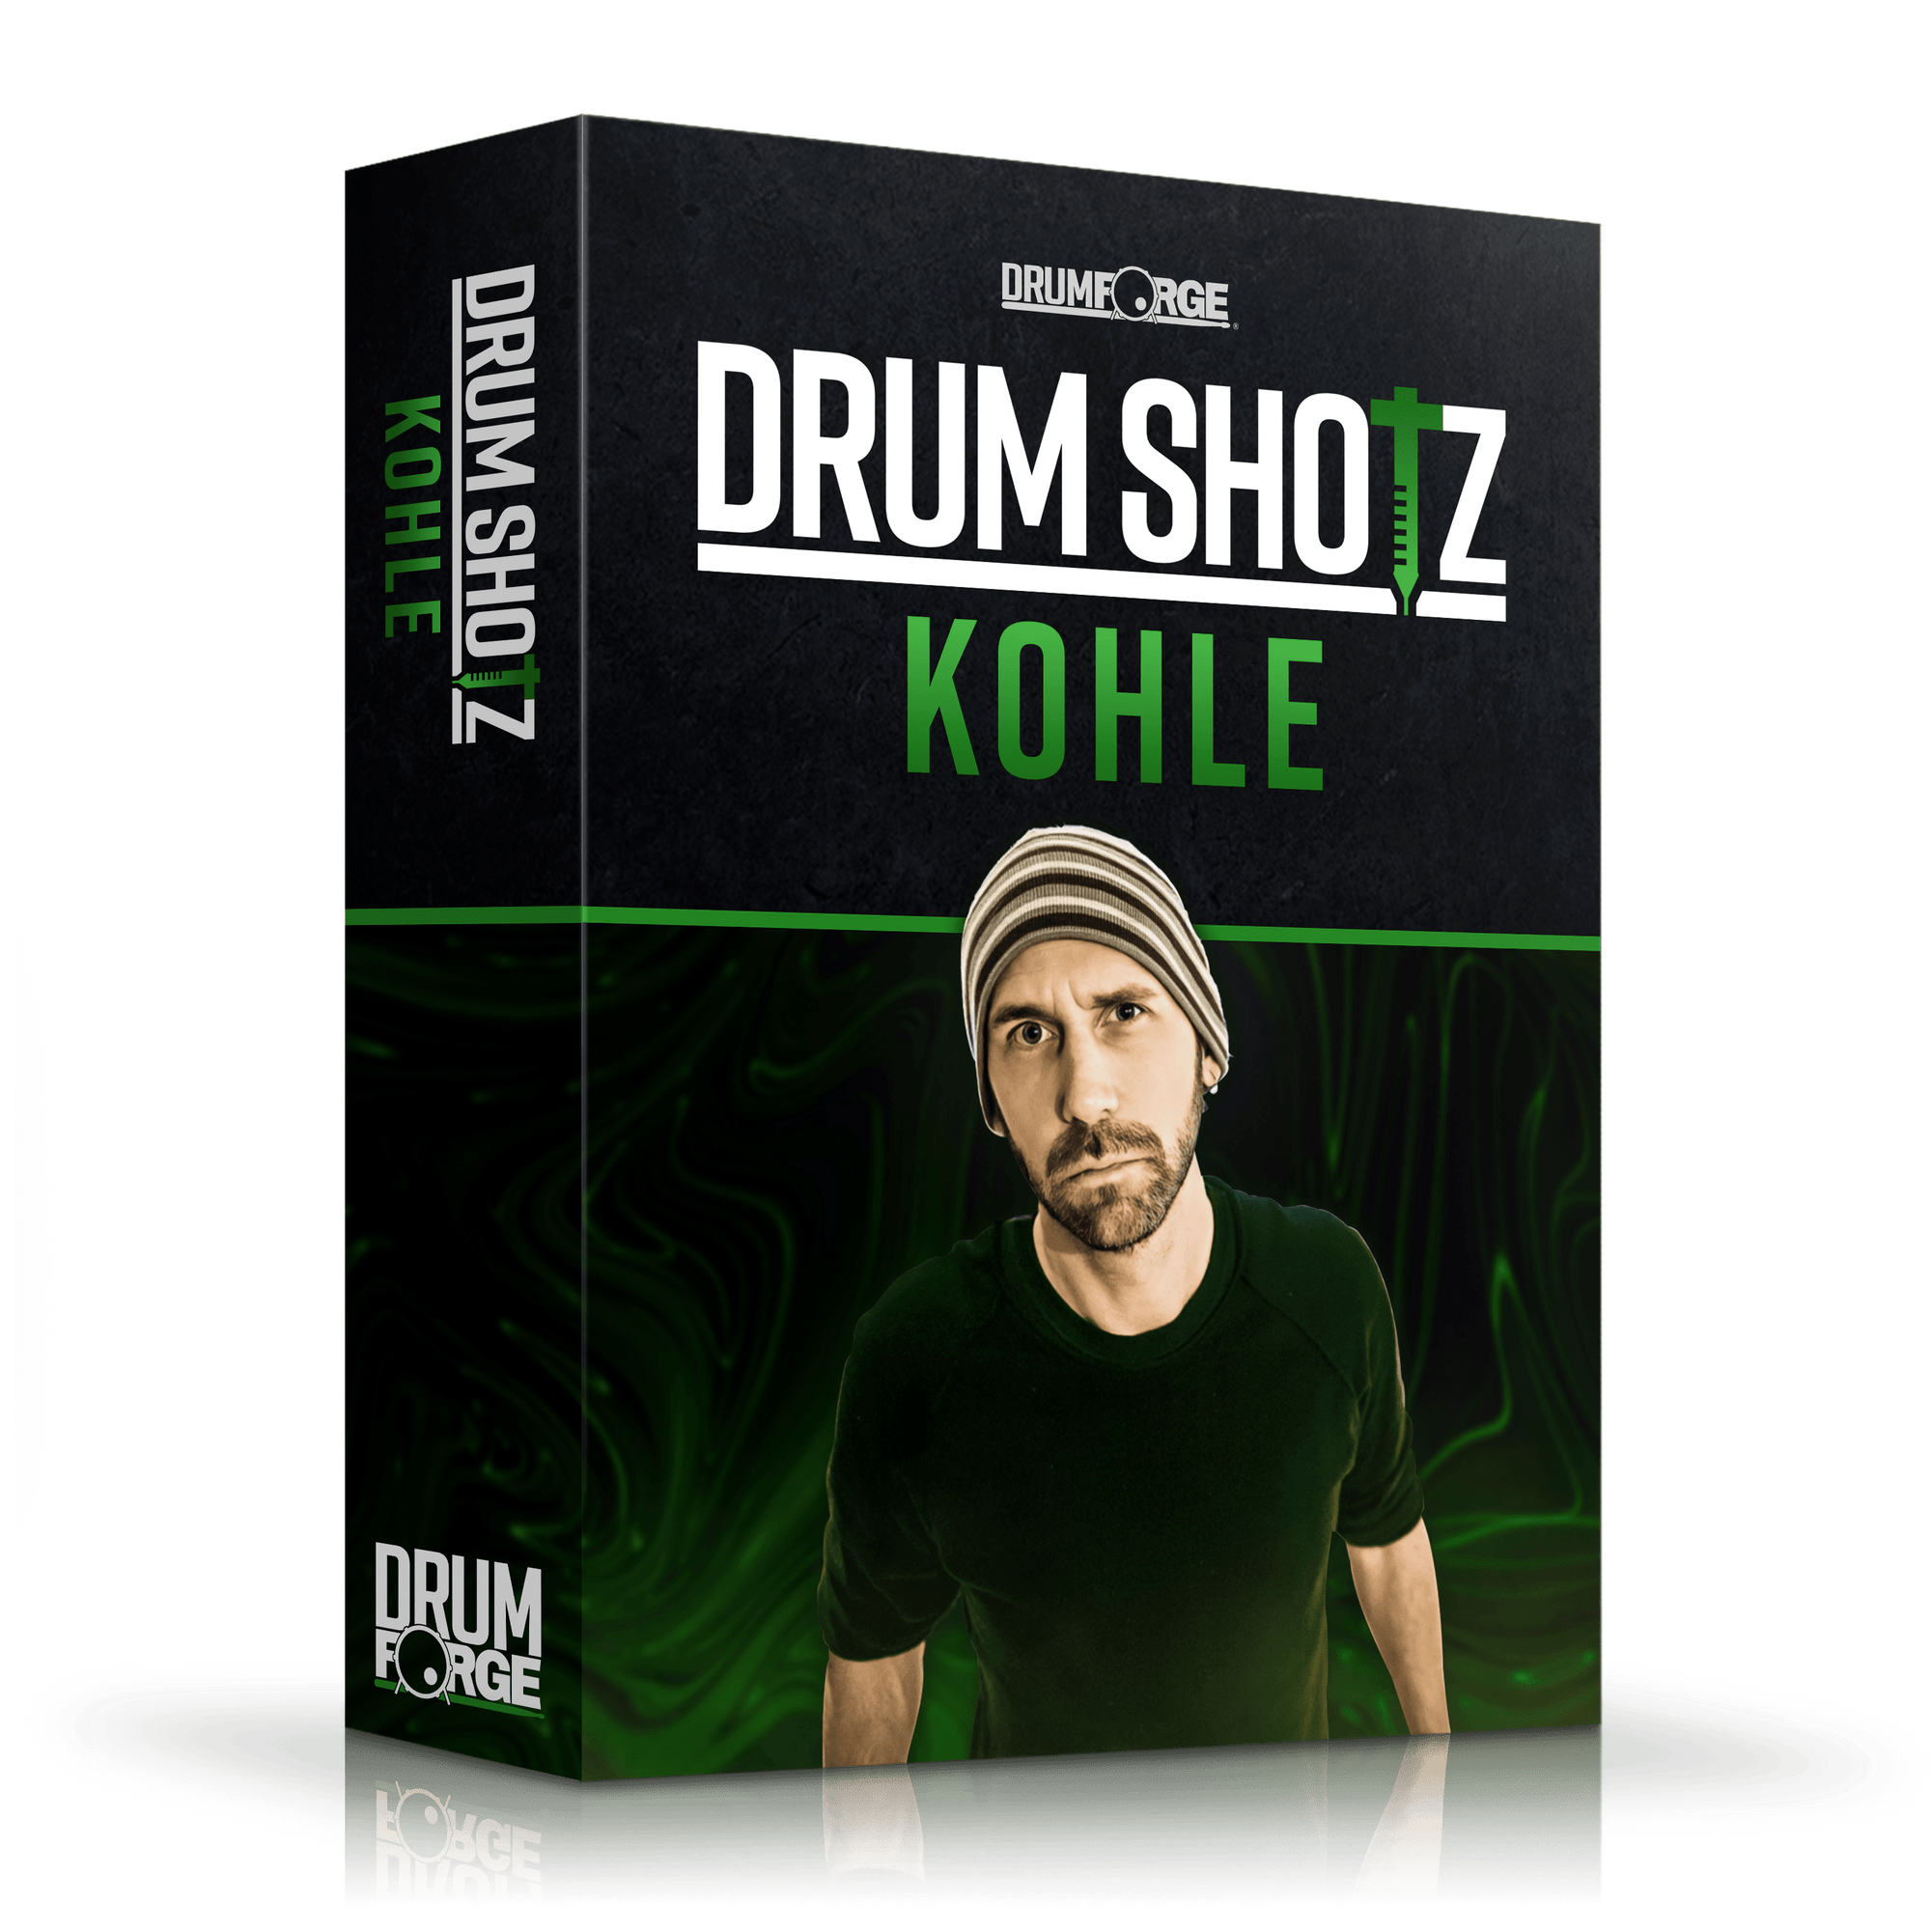 Drumshotz Kohle